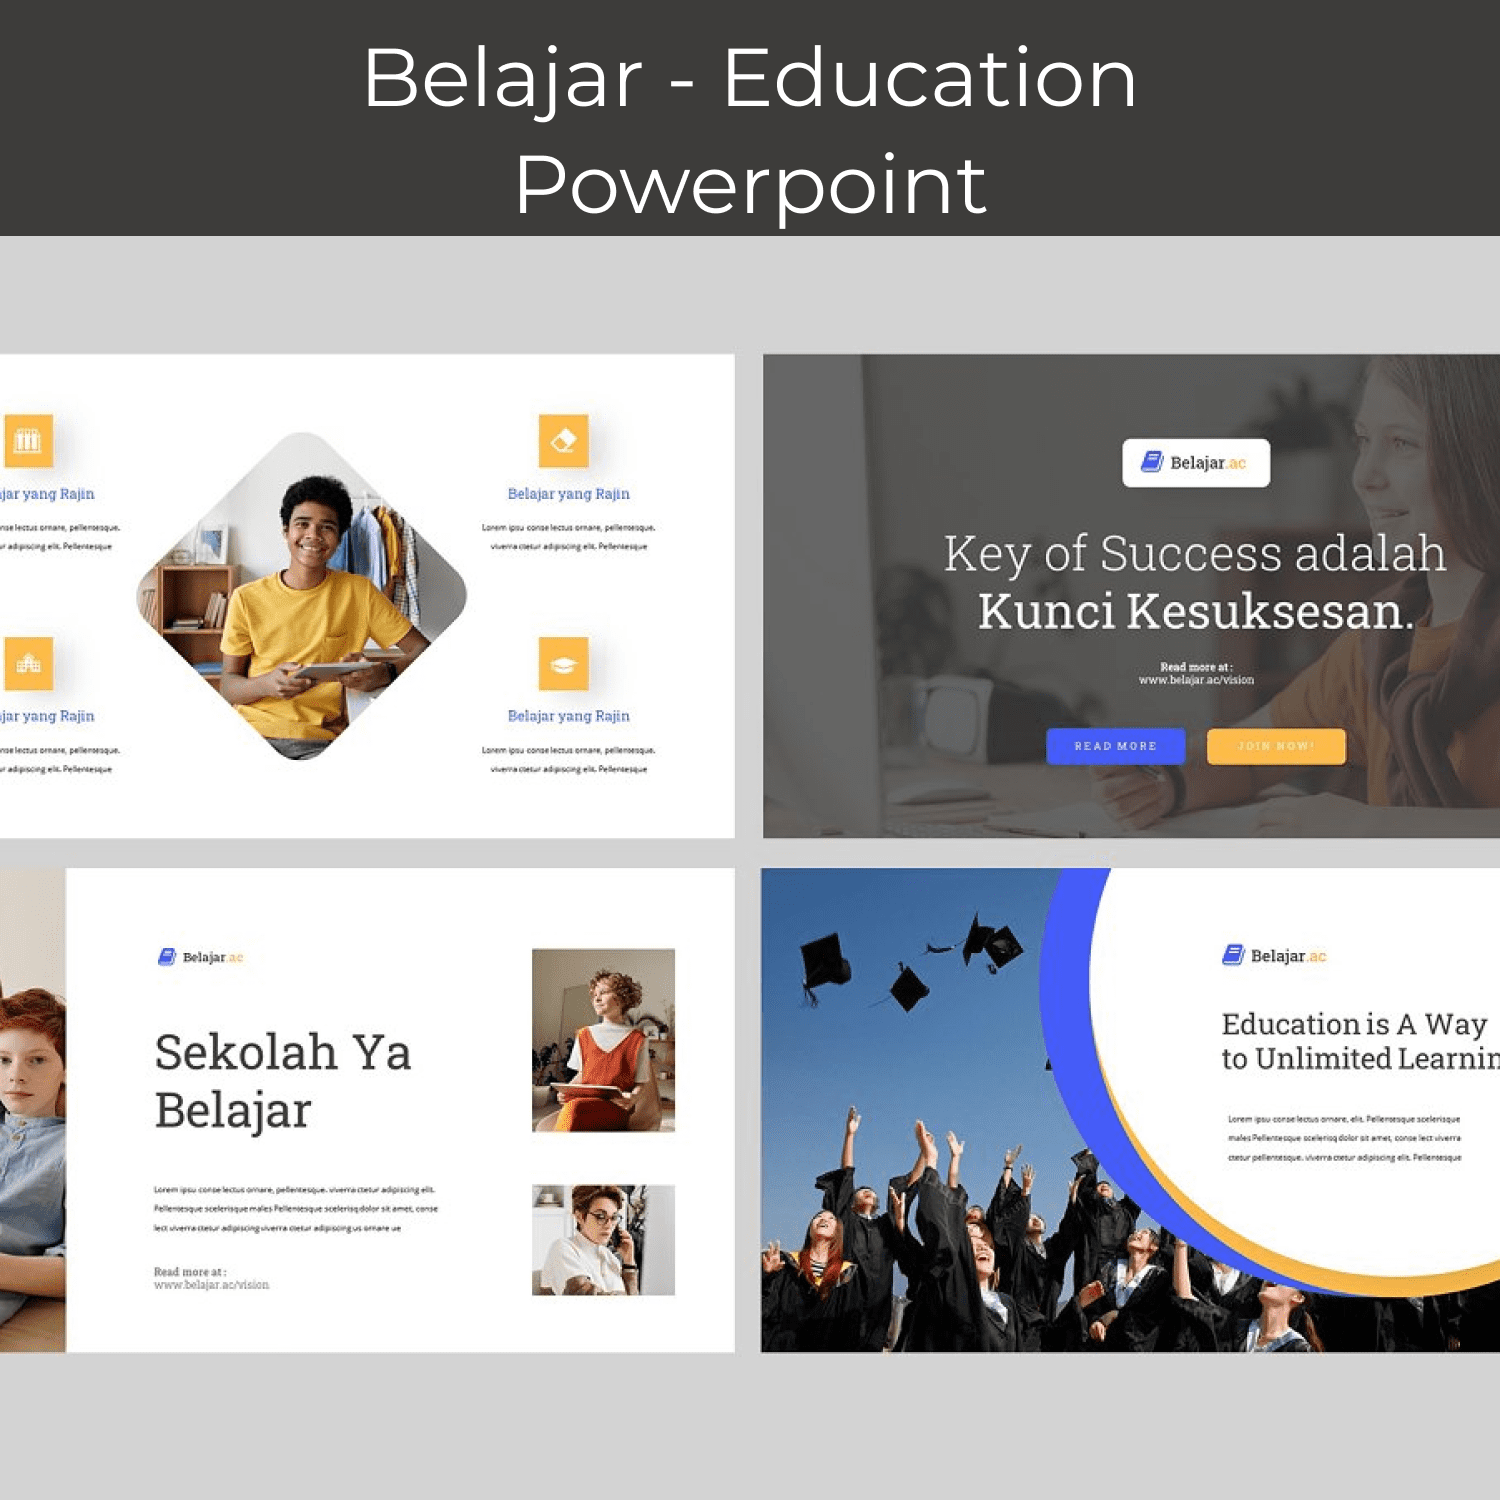 Belajar - Education Powerpoint cover.